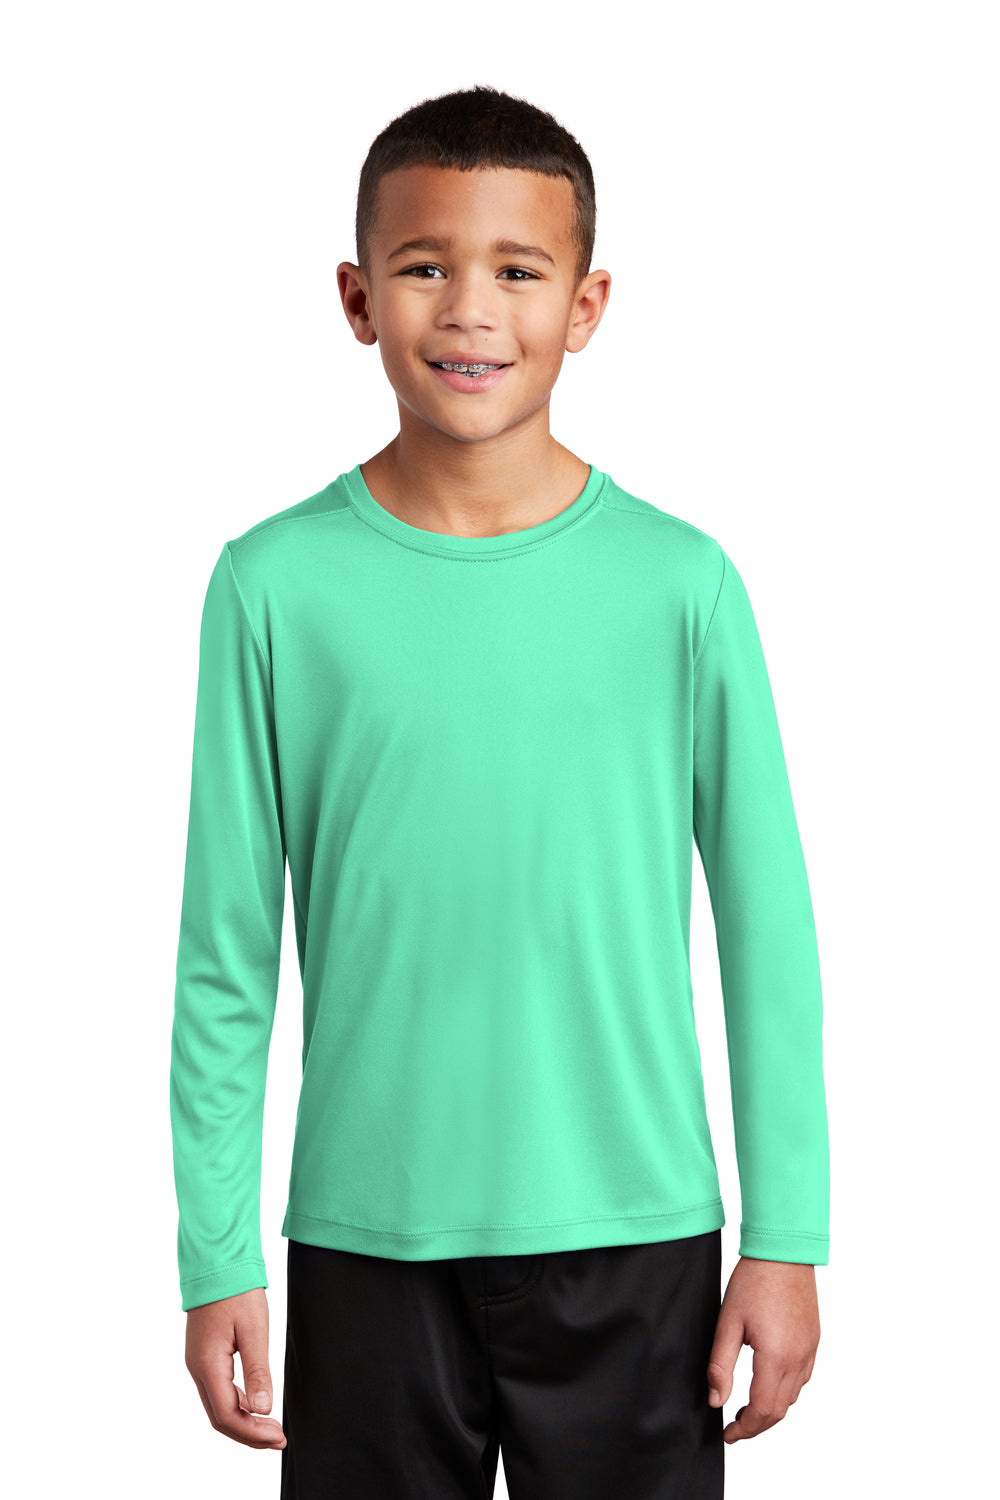 Sport-Tek Youth Long Sleeve Crewneck T-Shirt Bright Seafoam Green Front